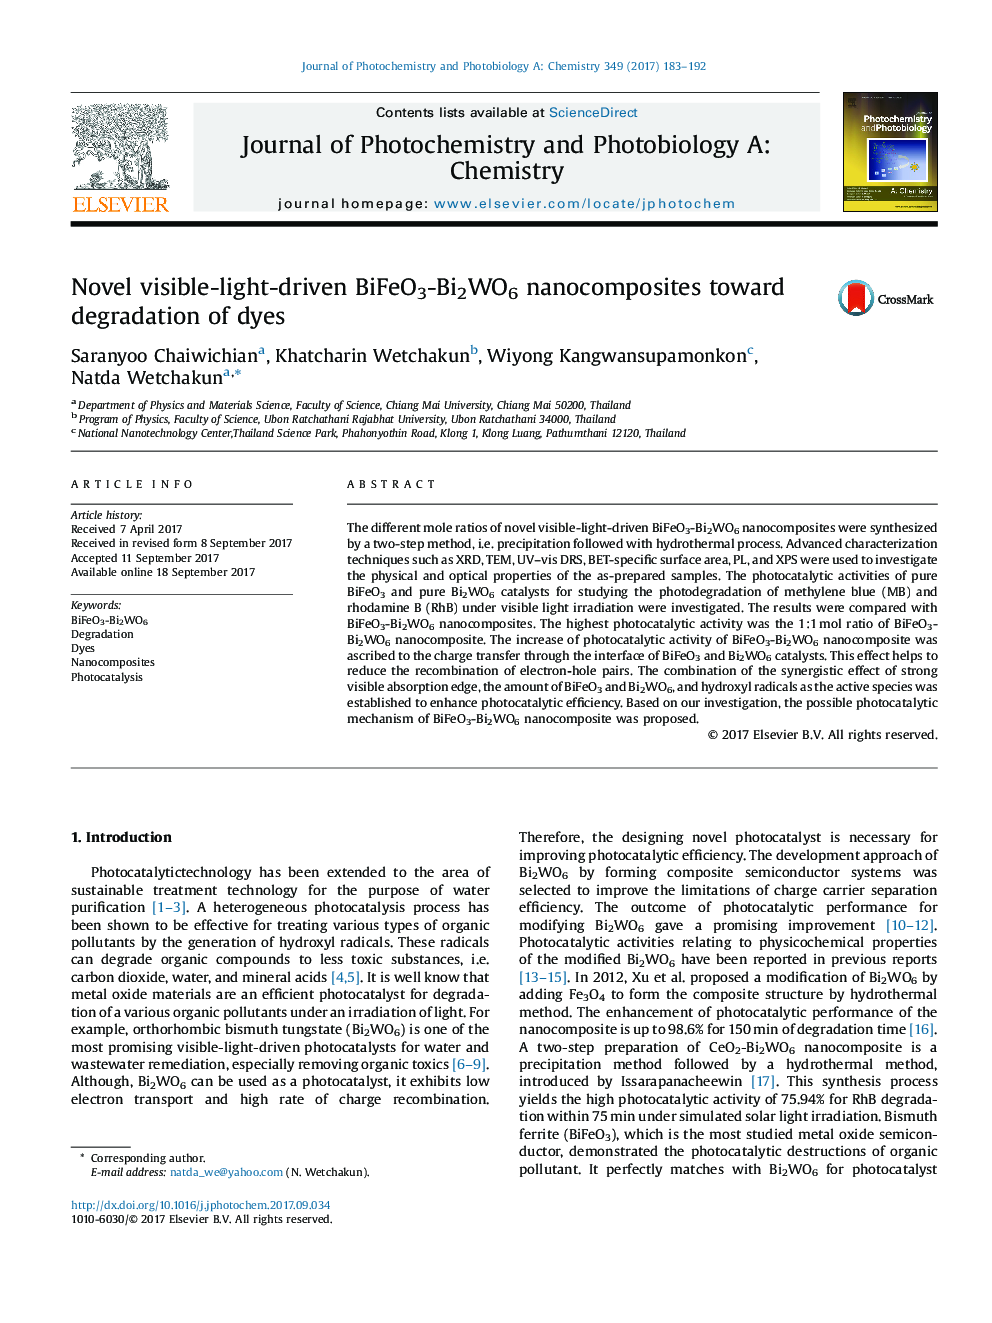 Novel visible-light-driven BiFeO3-Bi2WO6 nanocomposites toward degradation of dyes